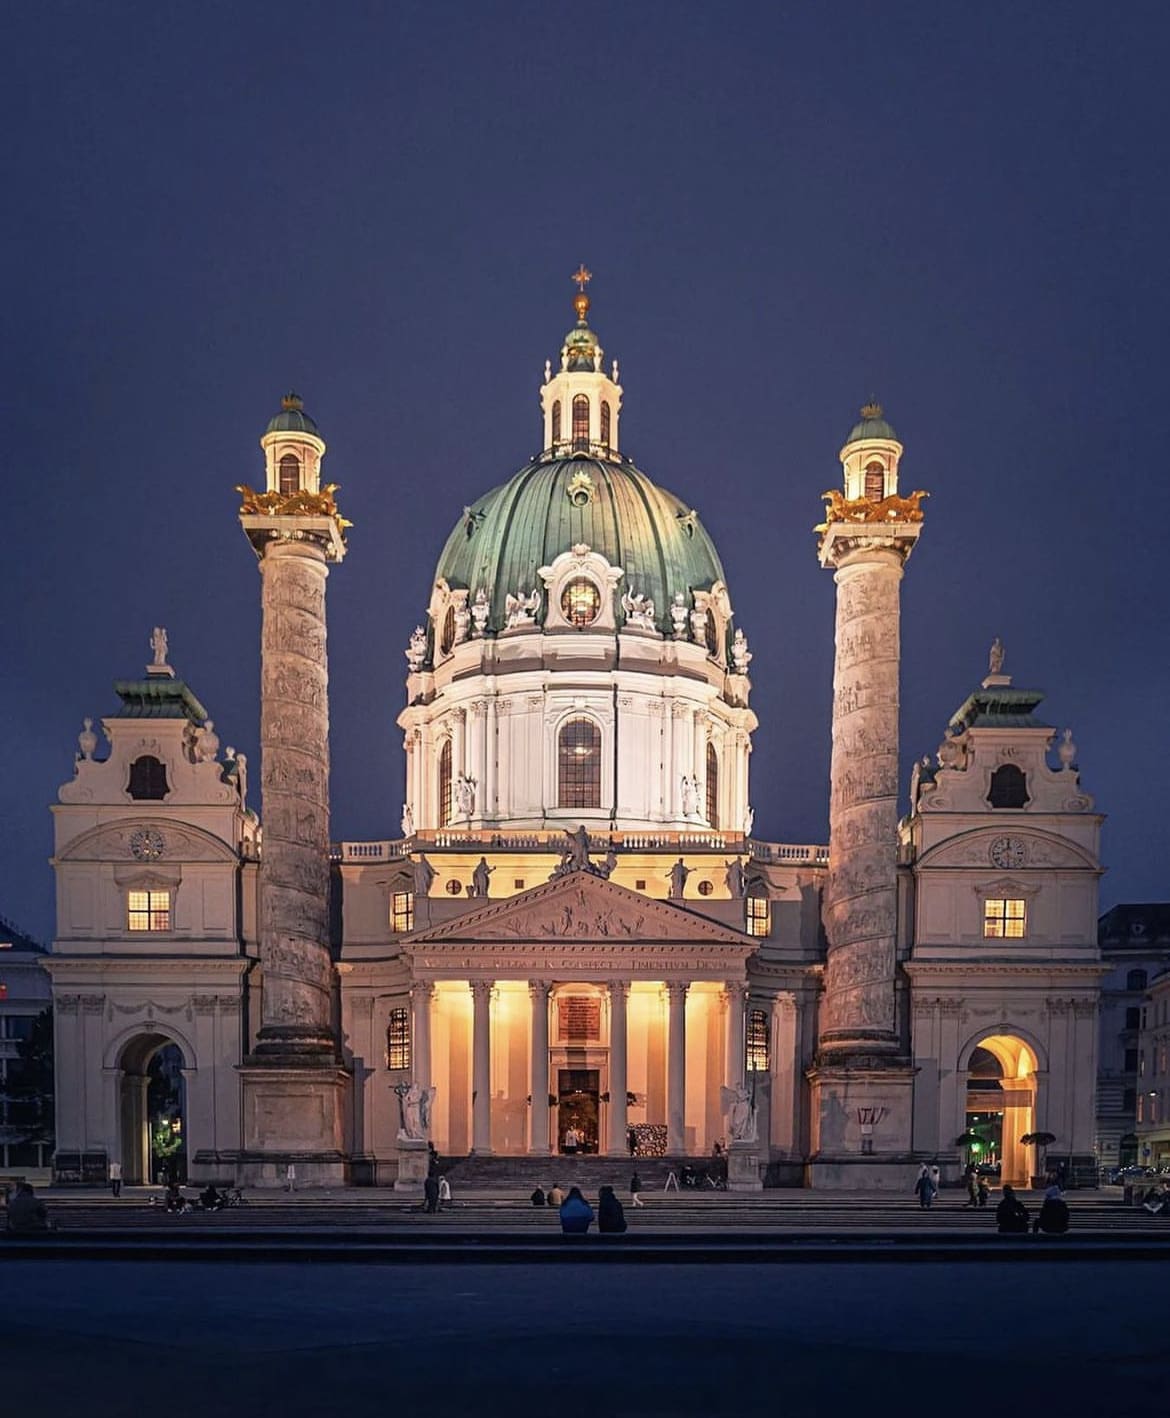 Stunning buildings in Austria